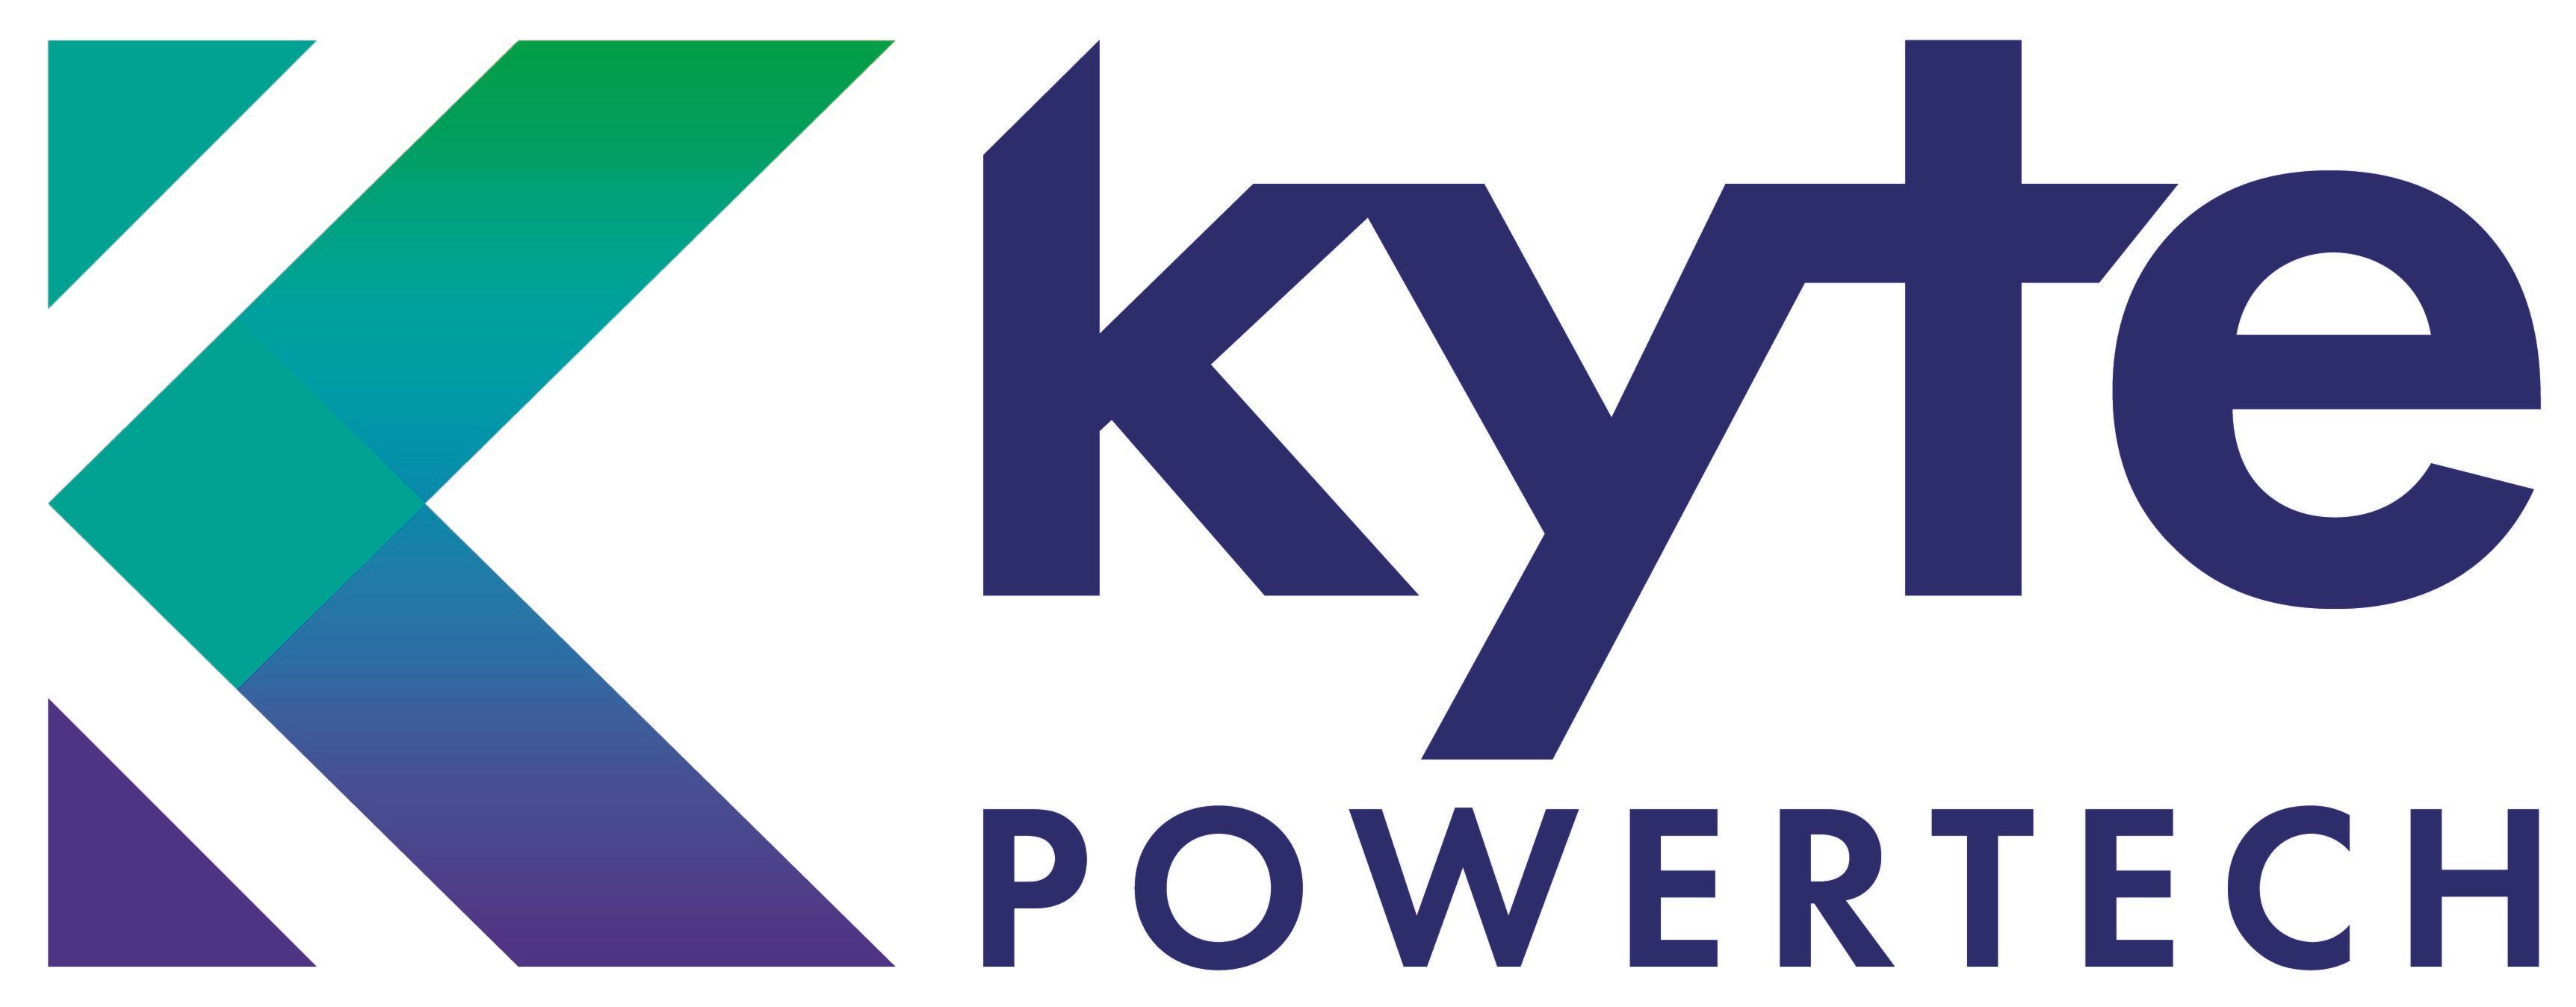 Kyte Powertech